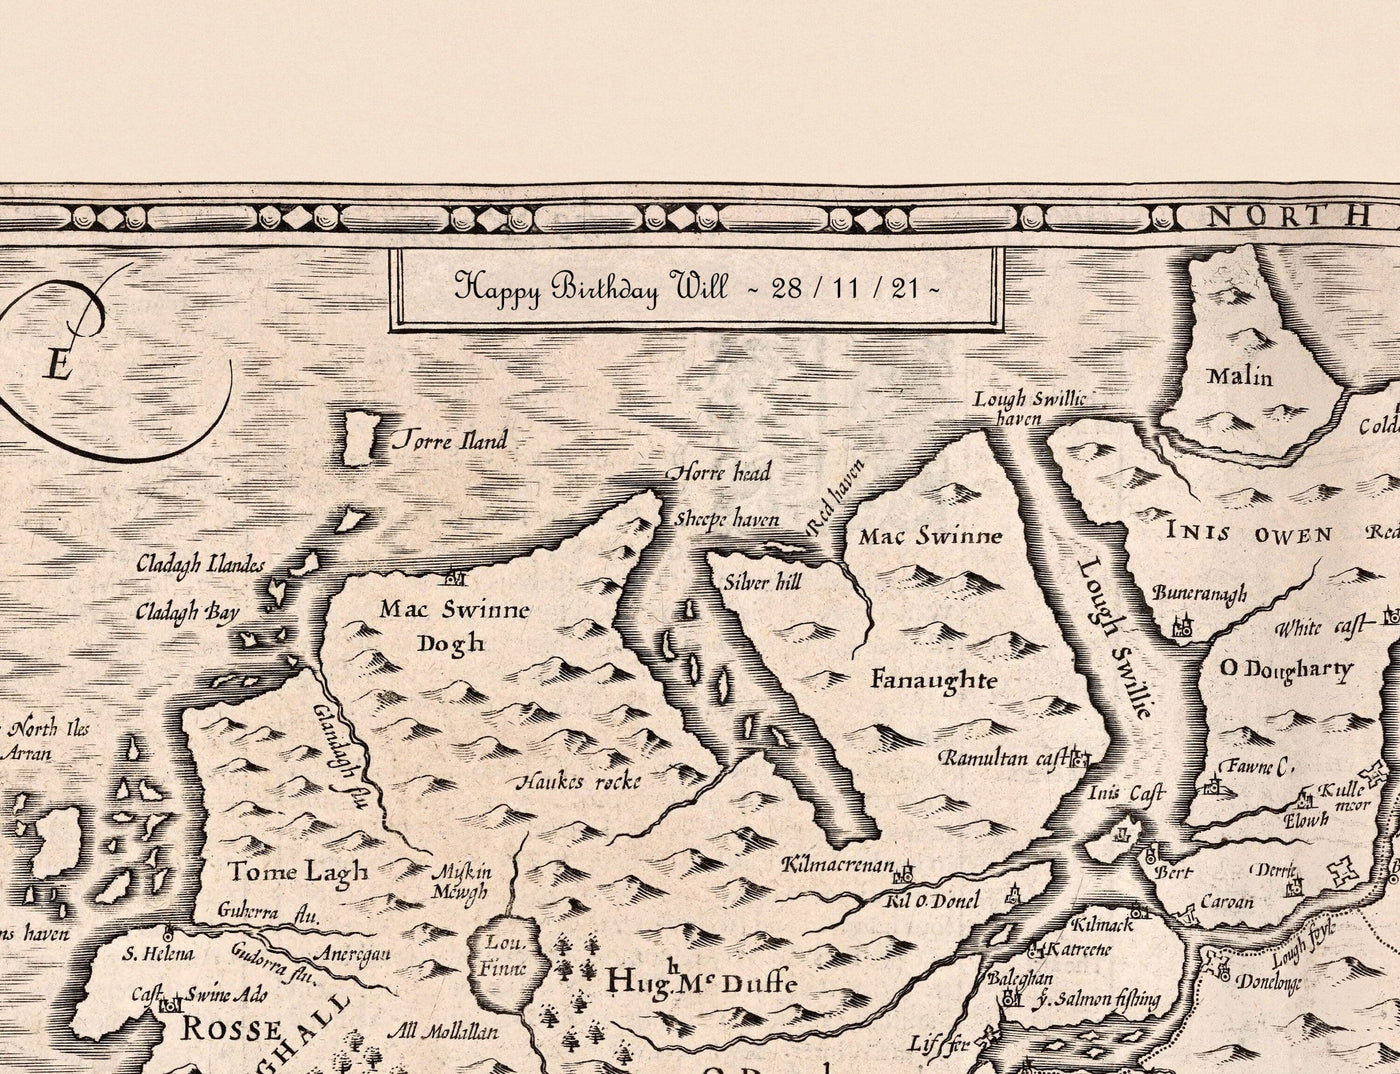 Alte Karte von Bedfordshire 1611, John Speed - Bedford, Luton, Dunstable, St Neots, Kempston, Leighton Buzzard